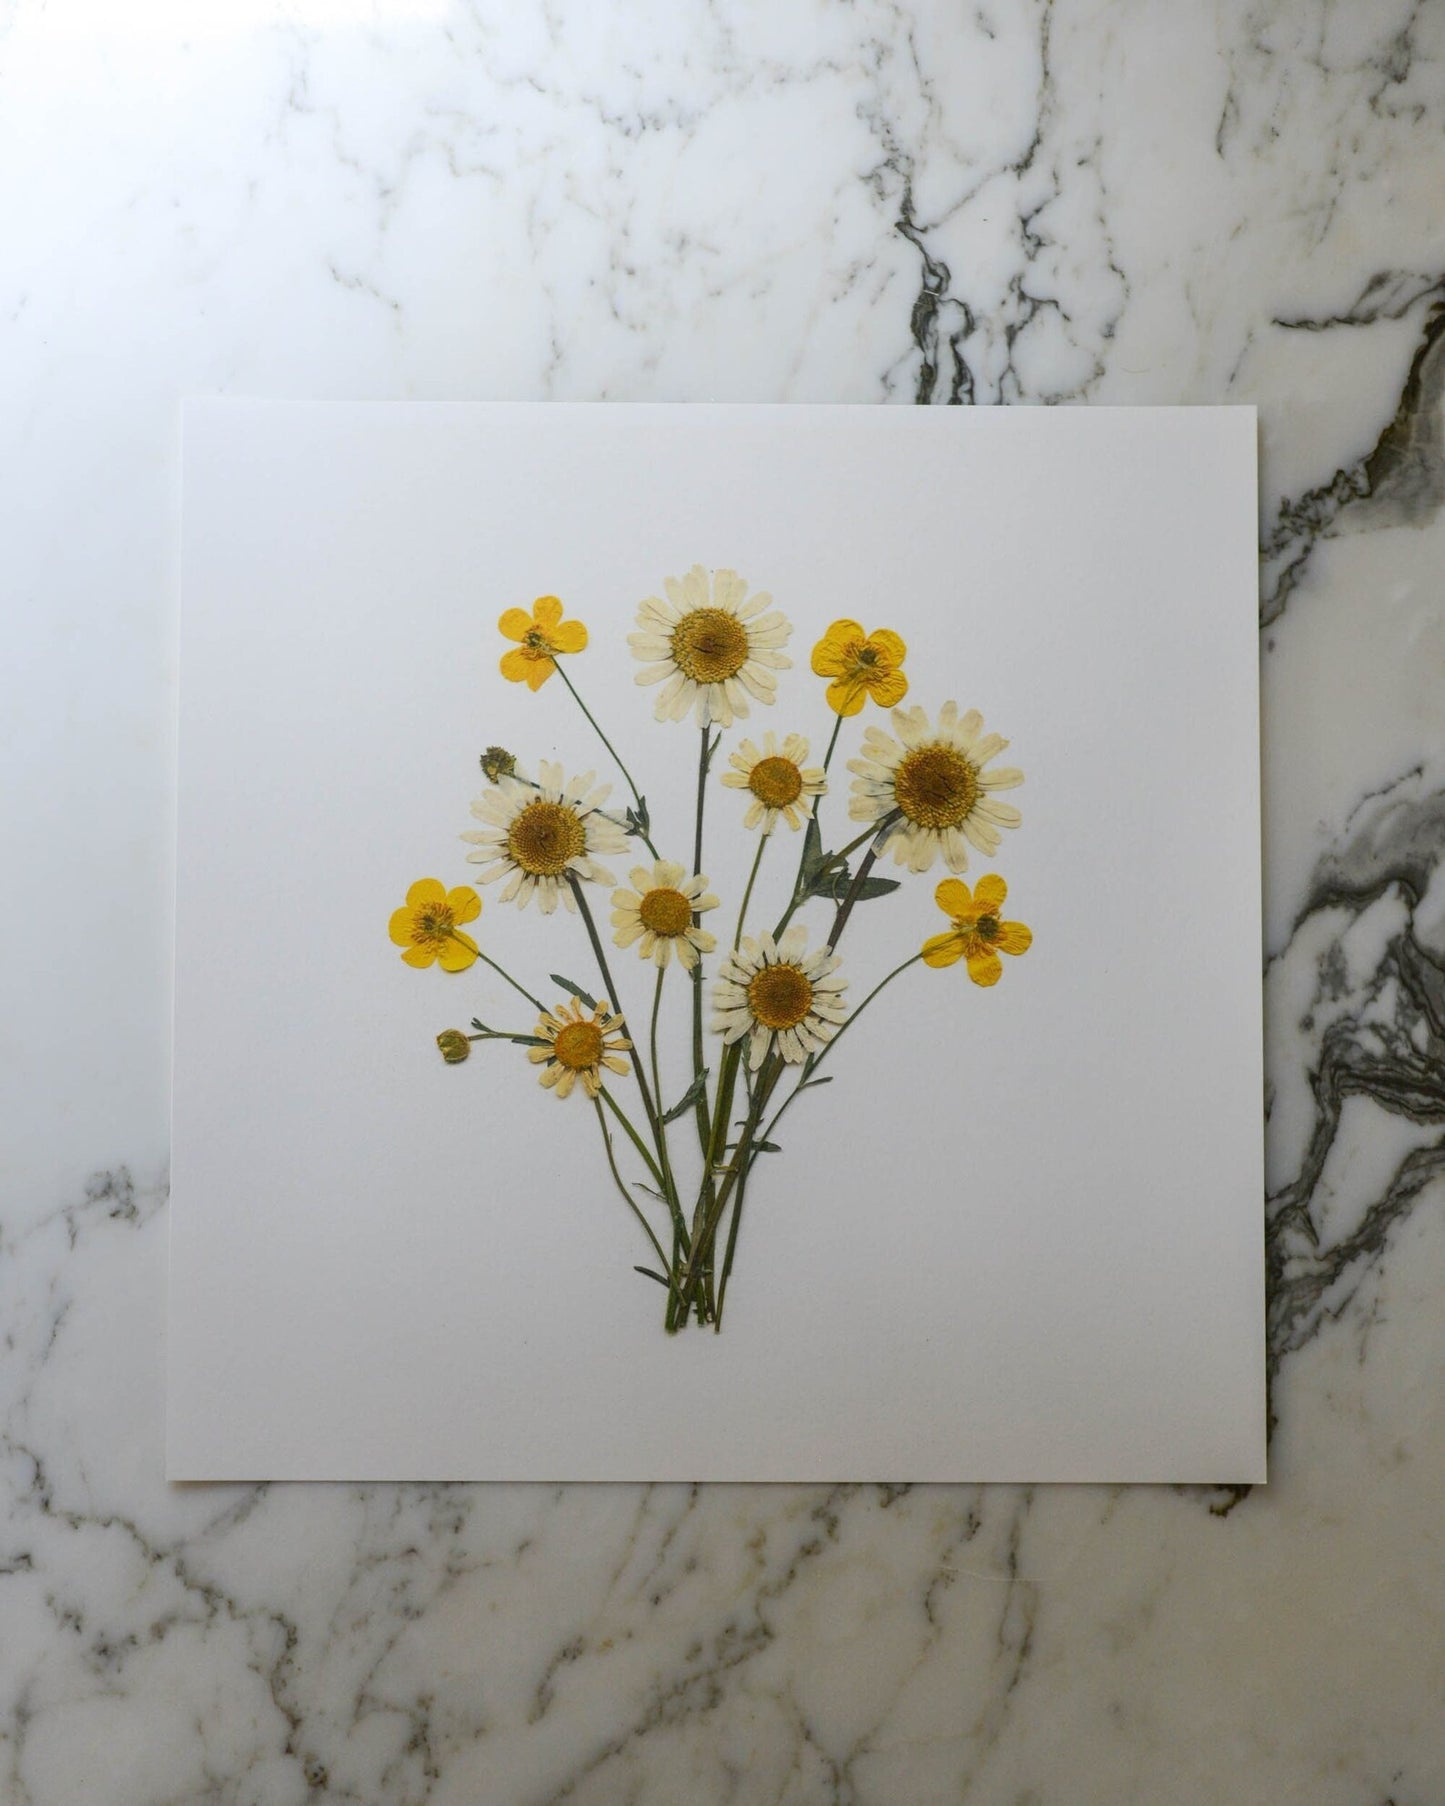 Birthday Bouquets - Art Print of Pressed Flowers